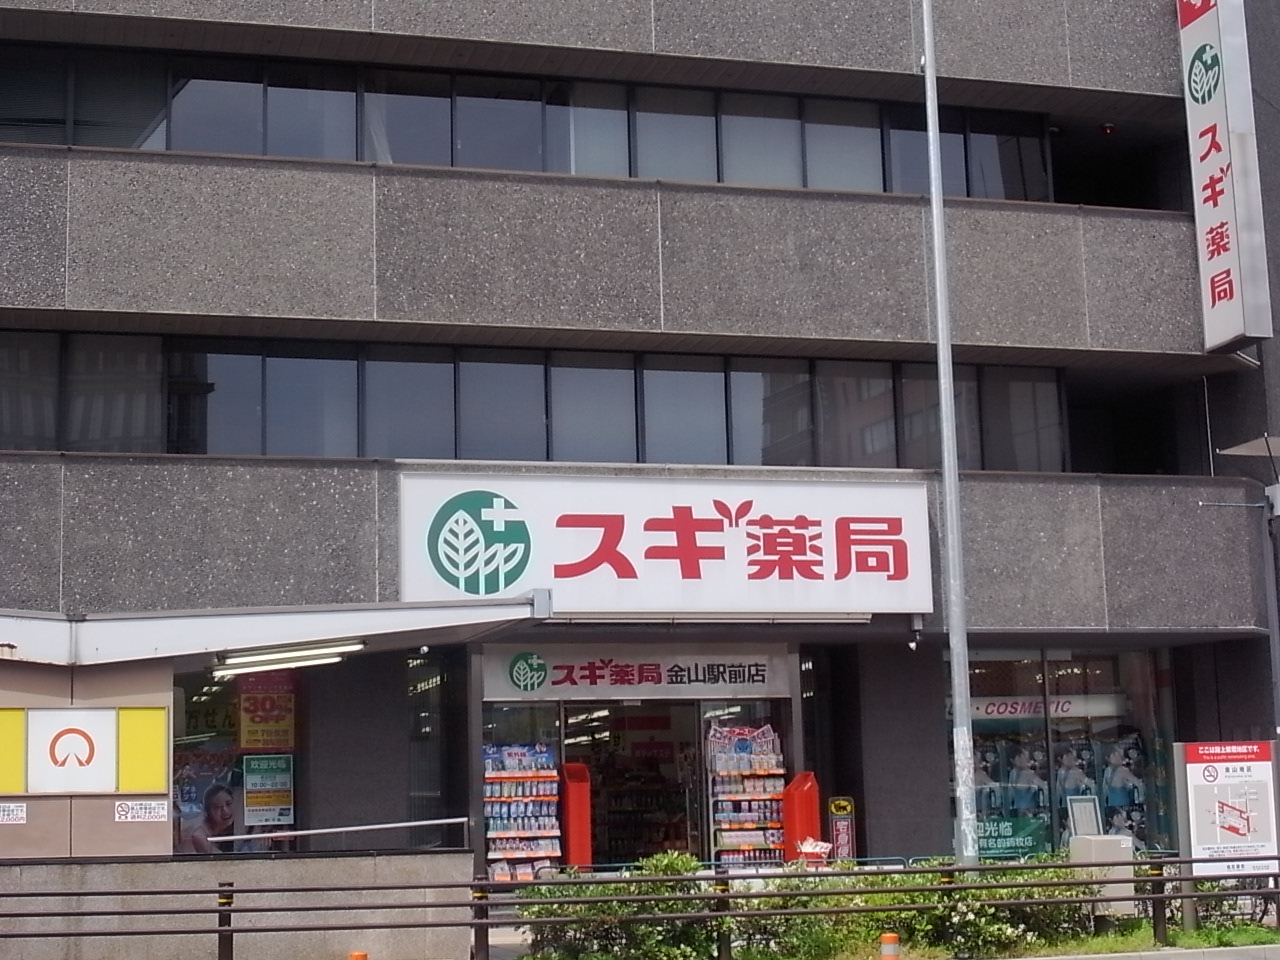 Dorakkusutoa. Cedar pharmacy Kanayama Station shop 230m until (drugstore)